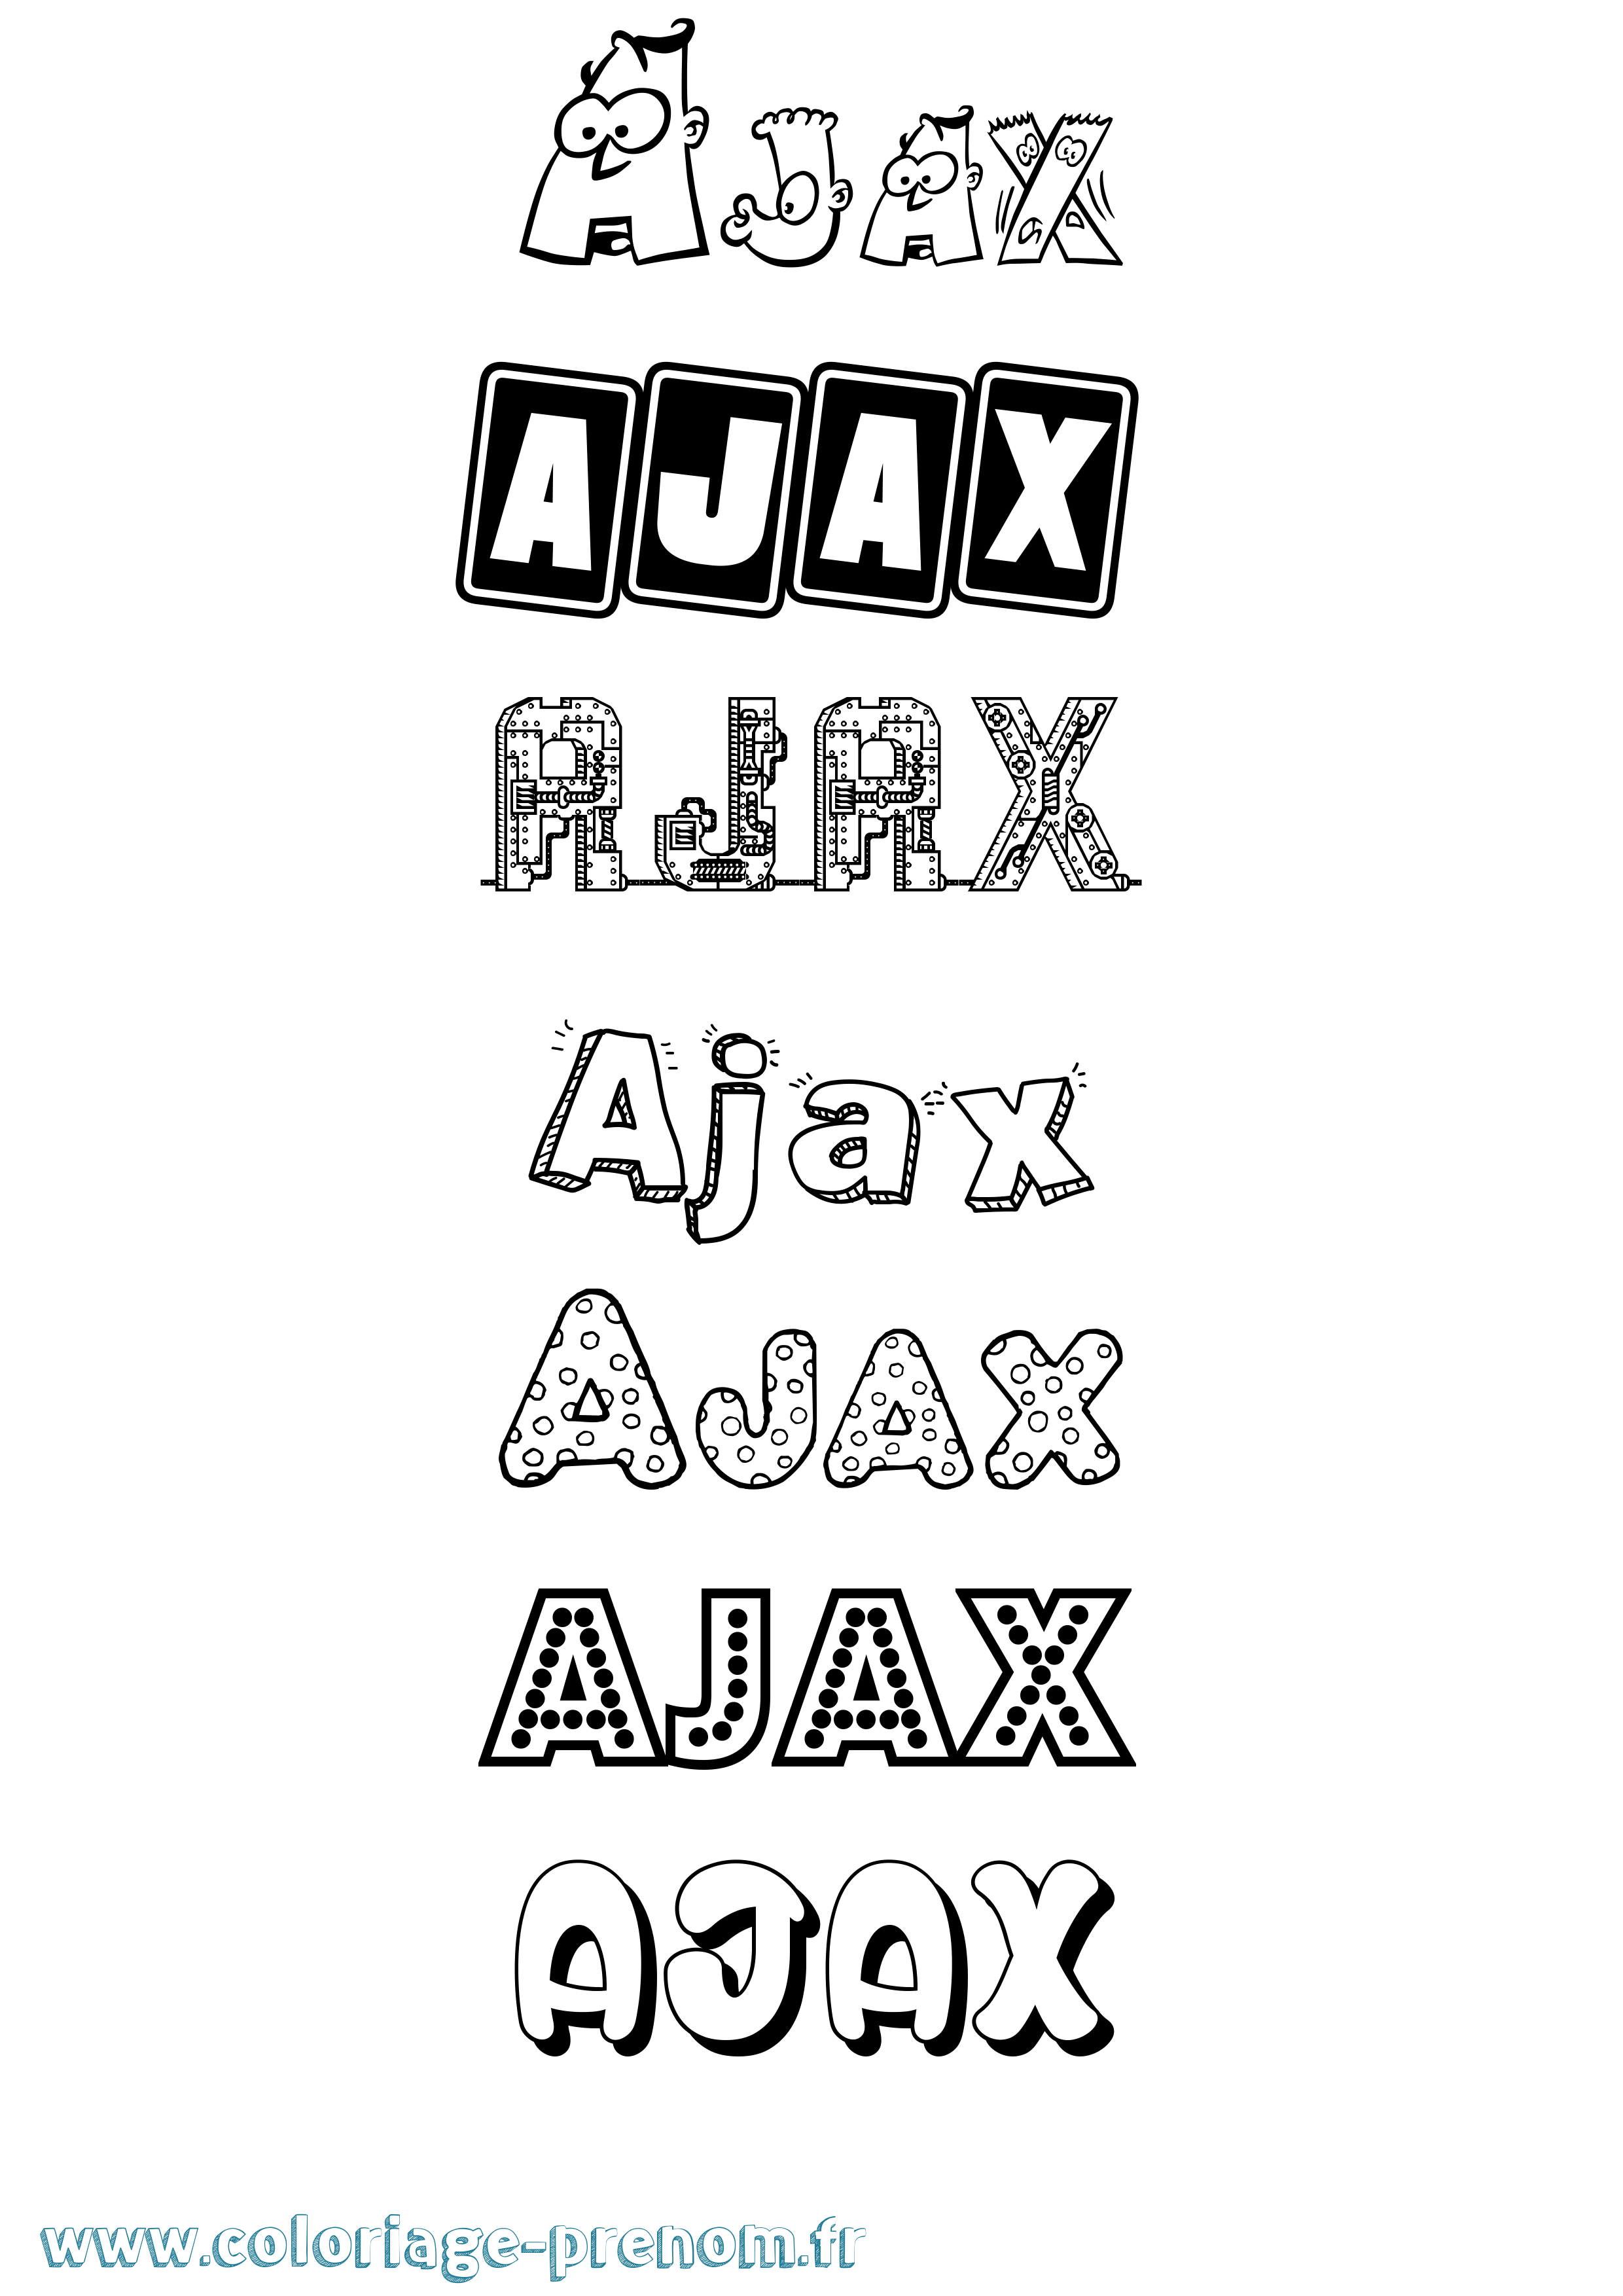 Coloriage prénom Ajax Fun